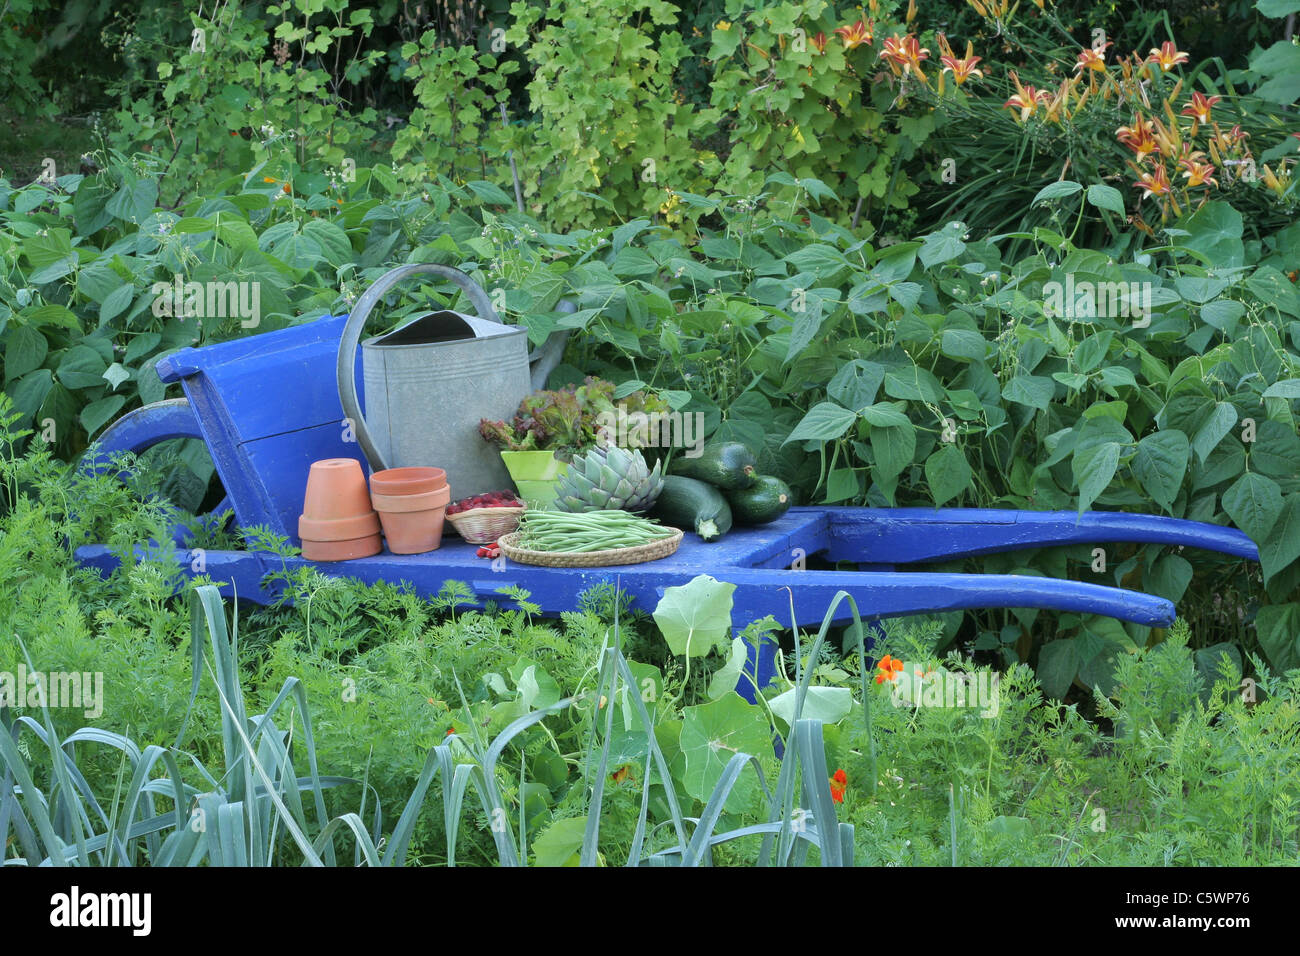 Vegetables from the garden on the wheelbarrow : green beans, artichoke, squashes, lettuce. Stock Photo